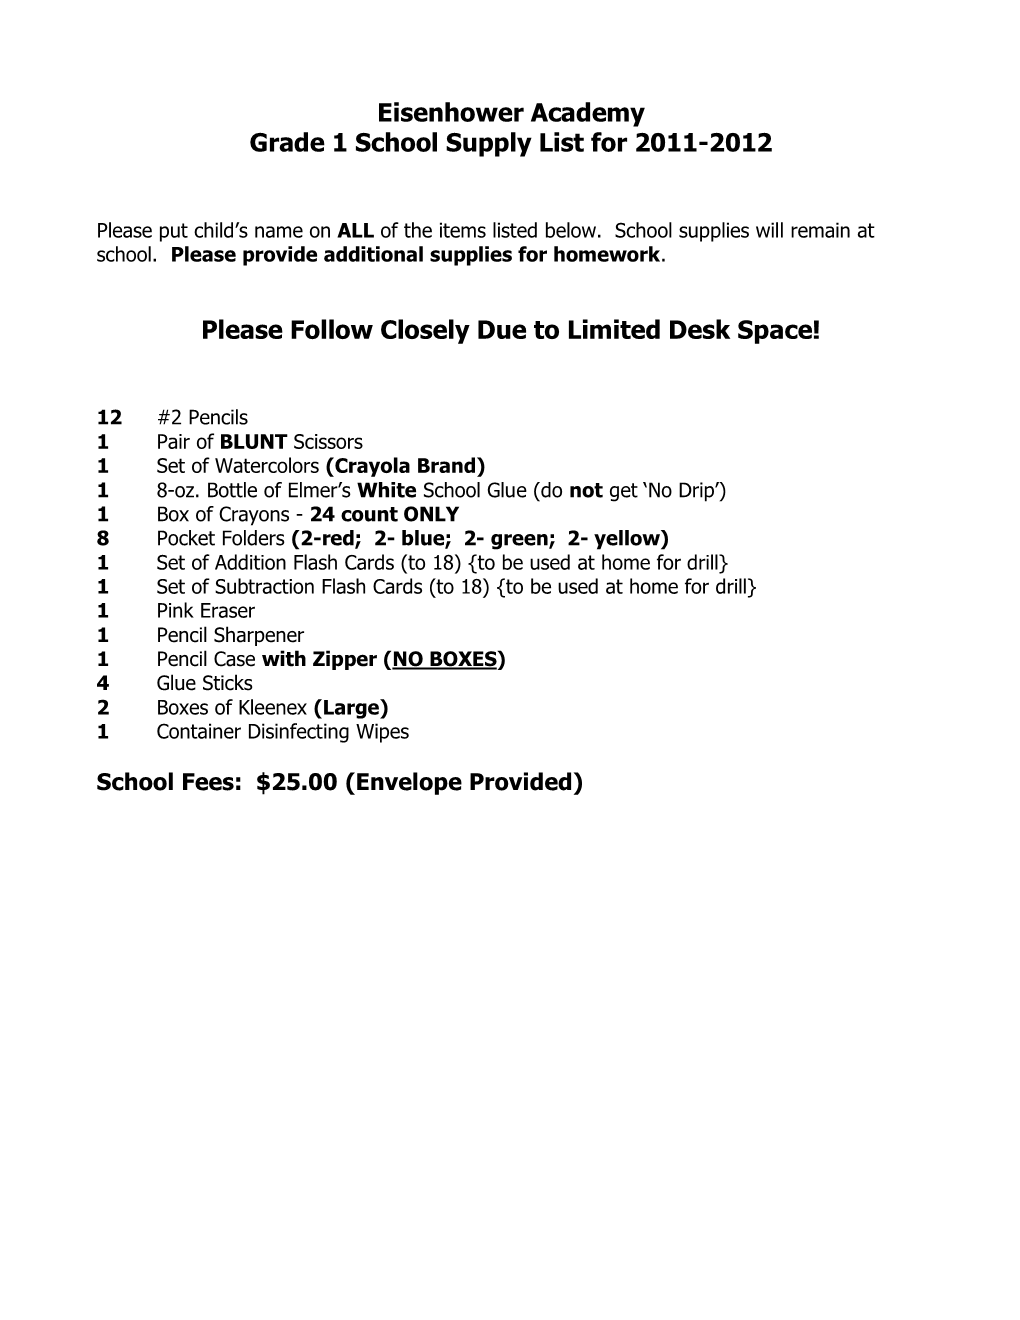 Eisenhower Academy Grade 1 School Supply List for 2011-2012